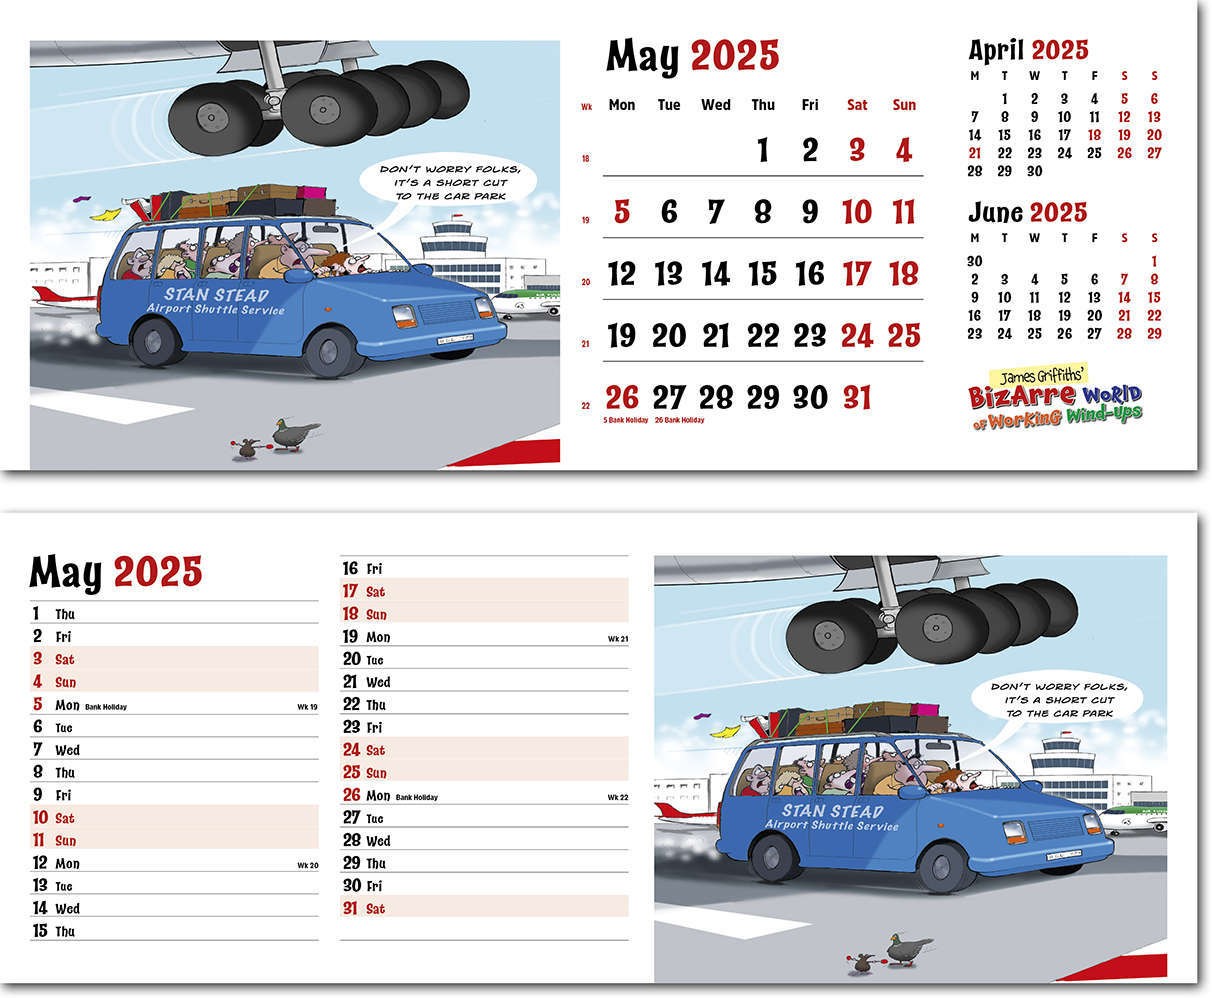 Bizarre World of Working Wind Ups Premium Lined Easel Desk Calendar